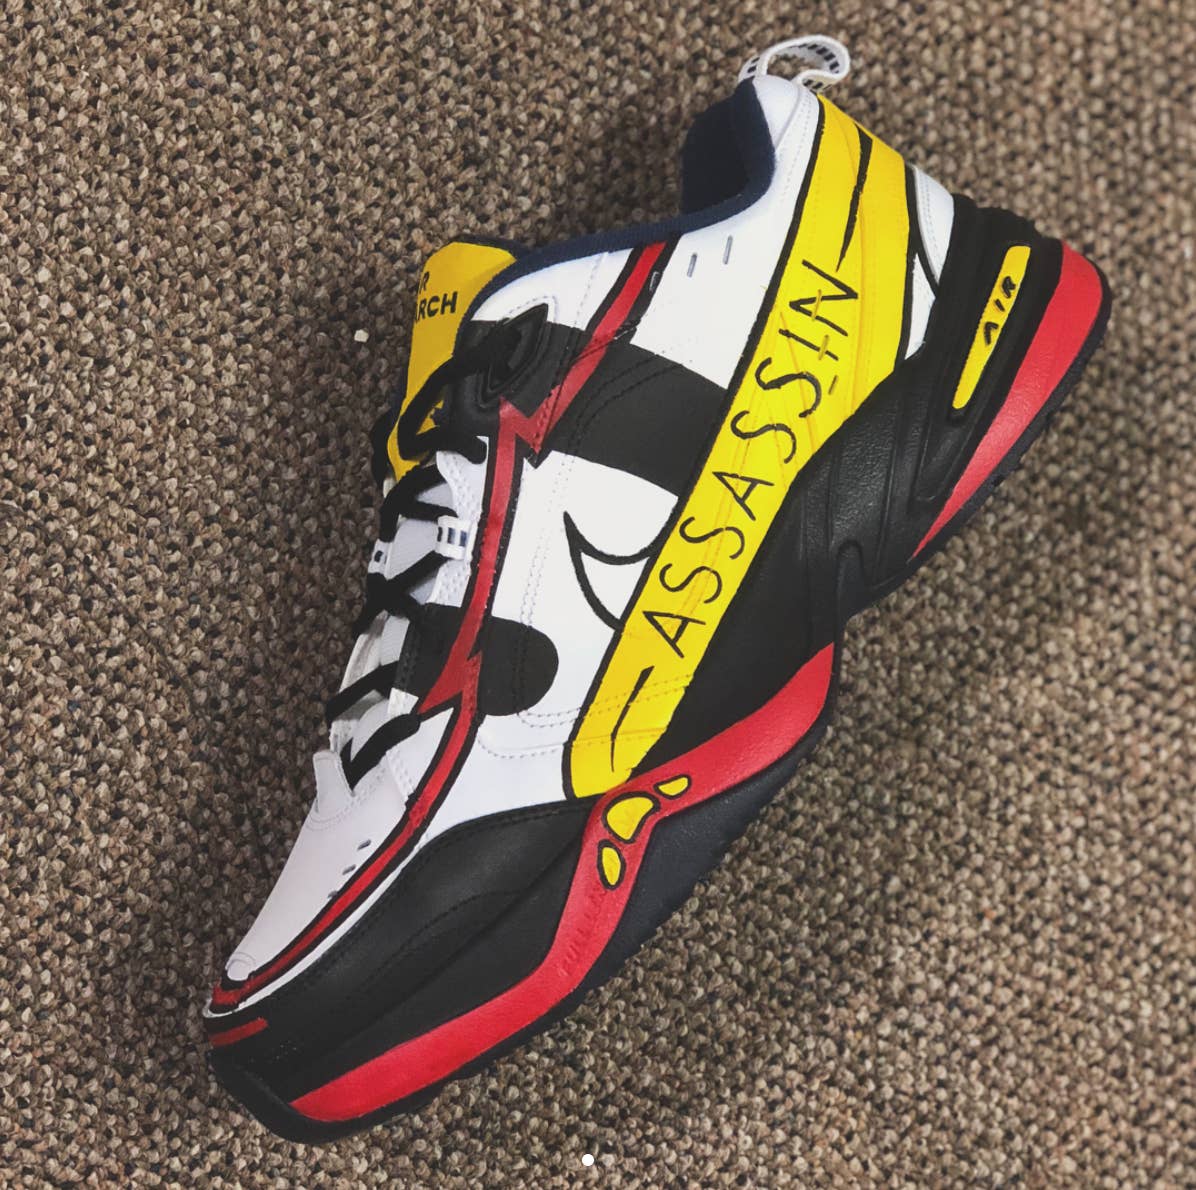 'Simpsons' Assassin Sneaker Nike Air Monarch by Mache Customs